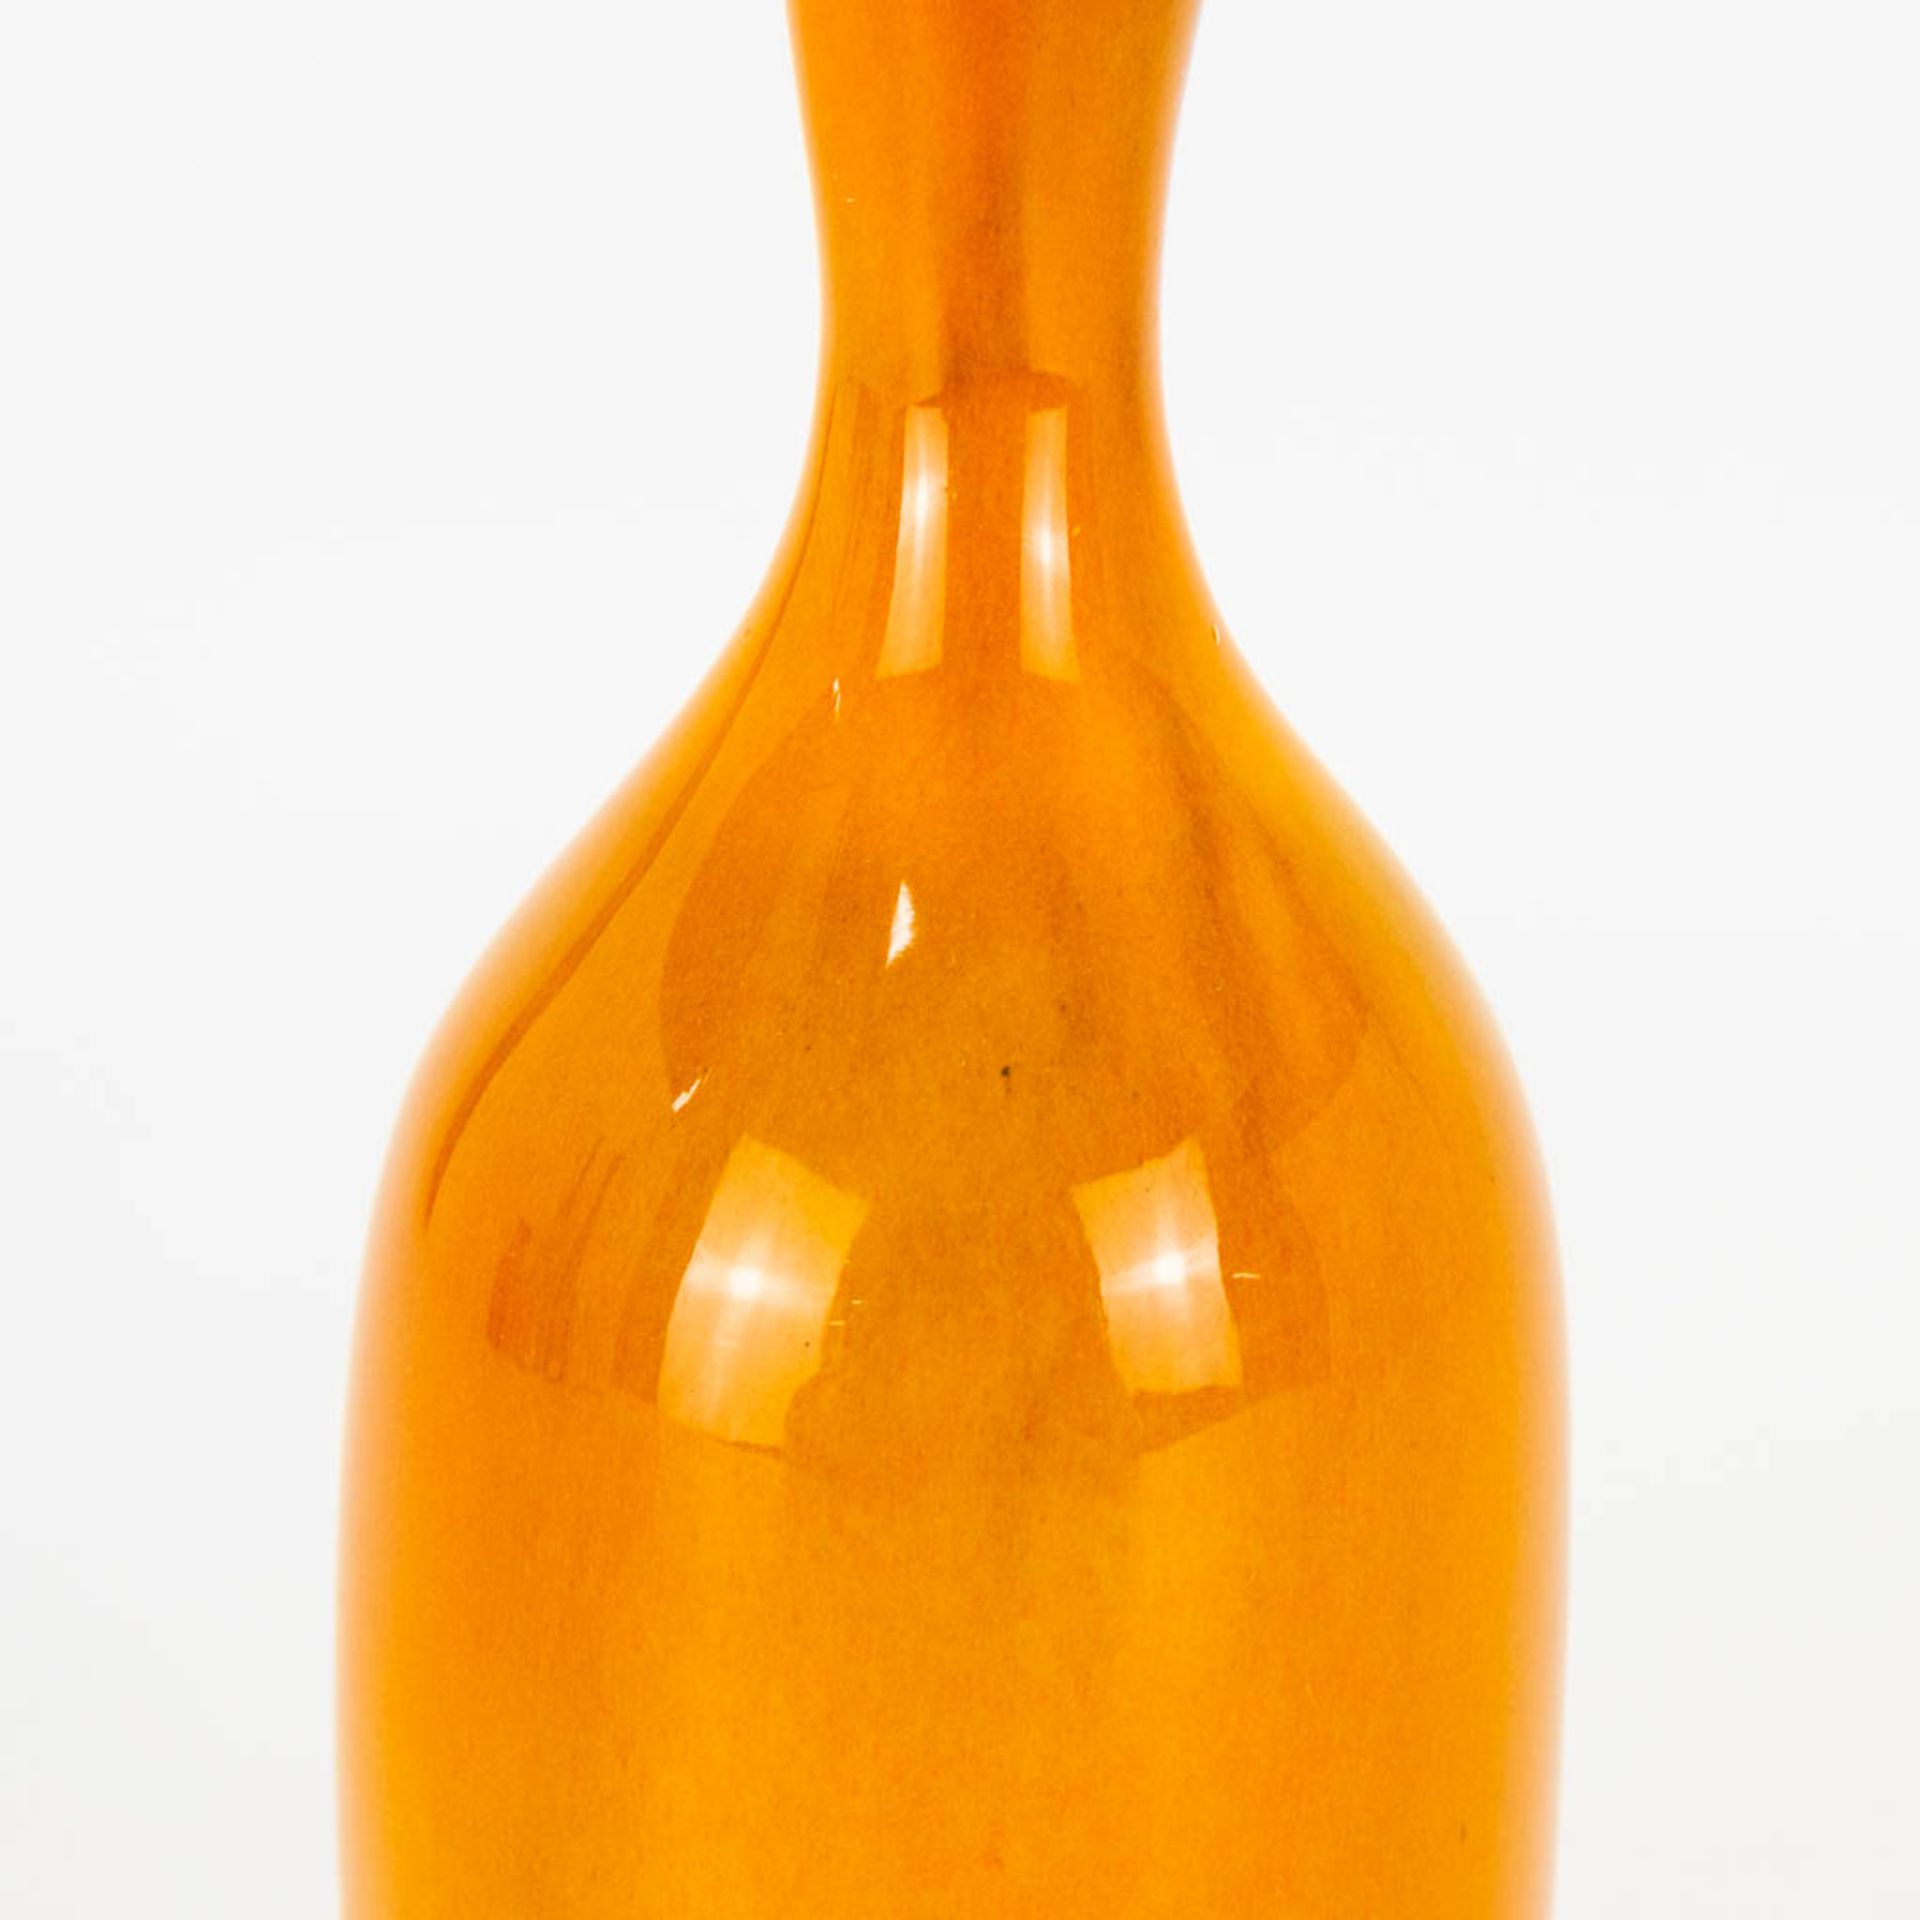 Jacques and Dani RUELLAND (XX-XXI) a soliflore vase with orange glaze. (15 x 6 cm) - Image 7 of 12